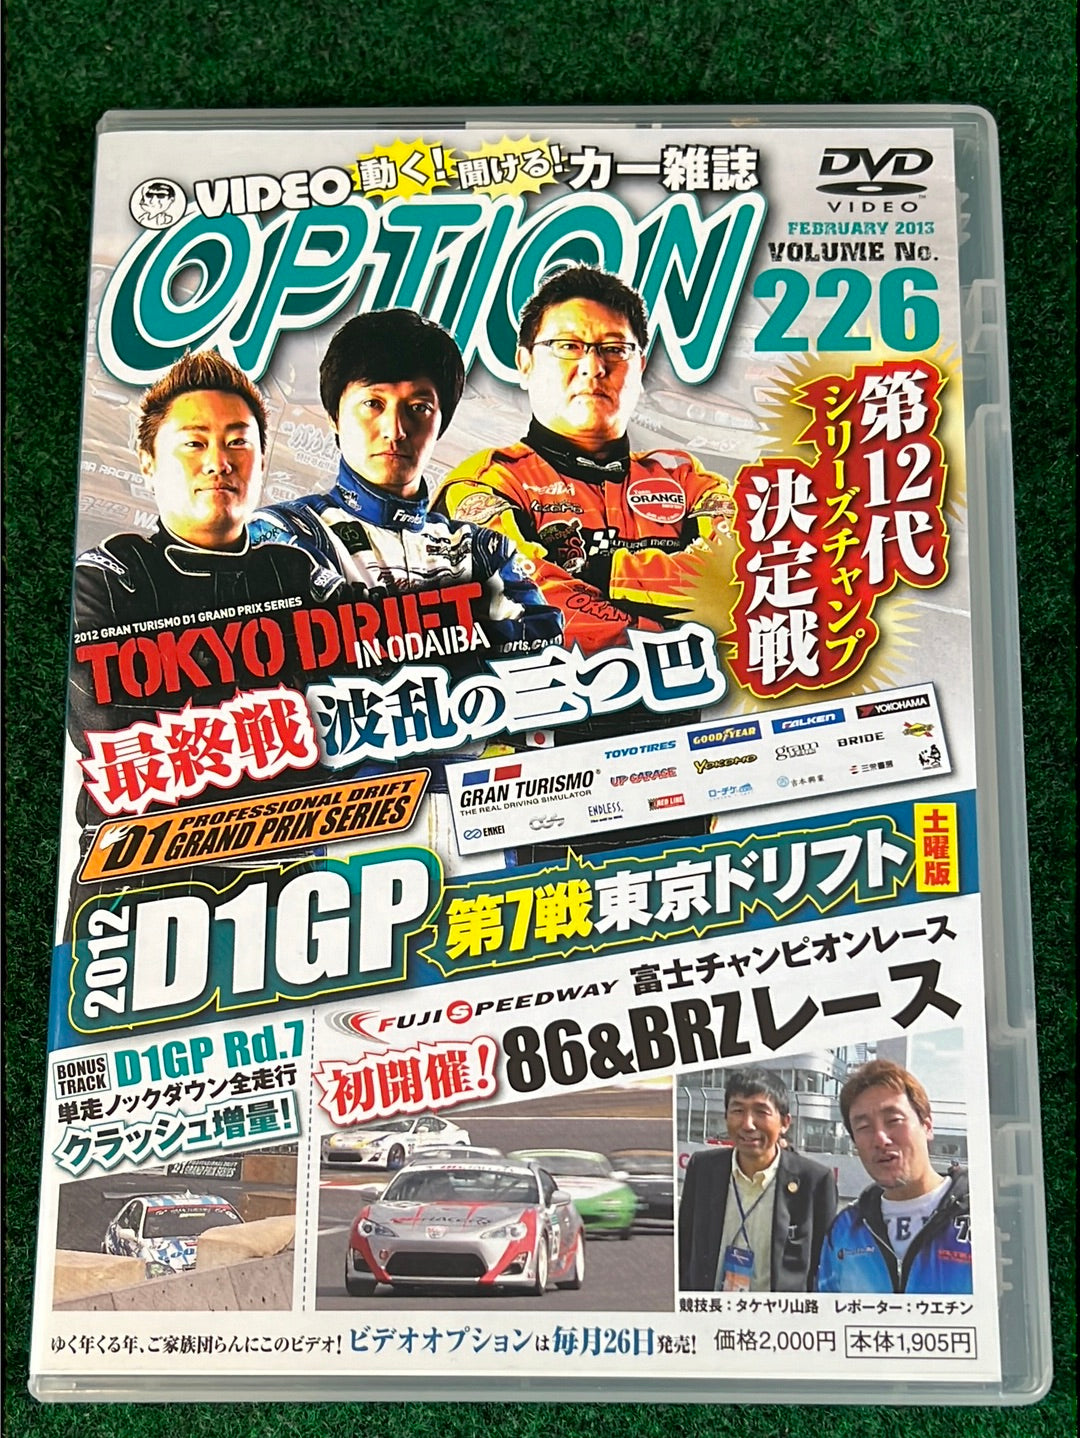 Option Video DVD - February 2013 Vol. 226